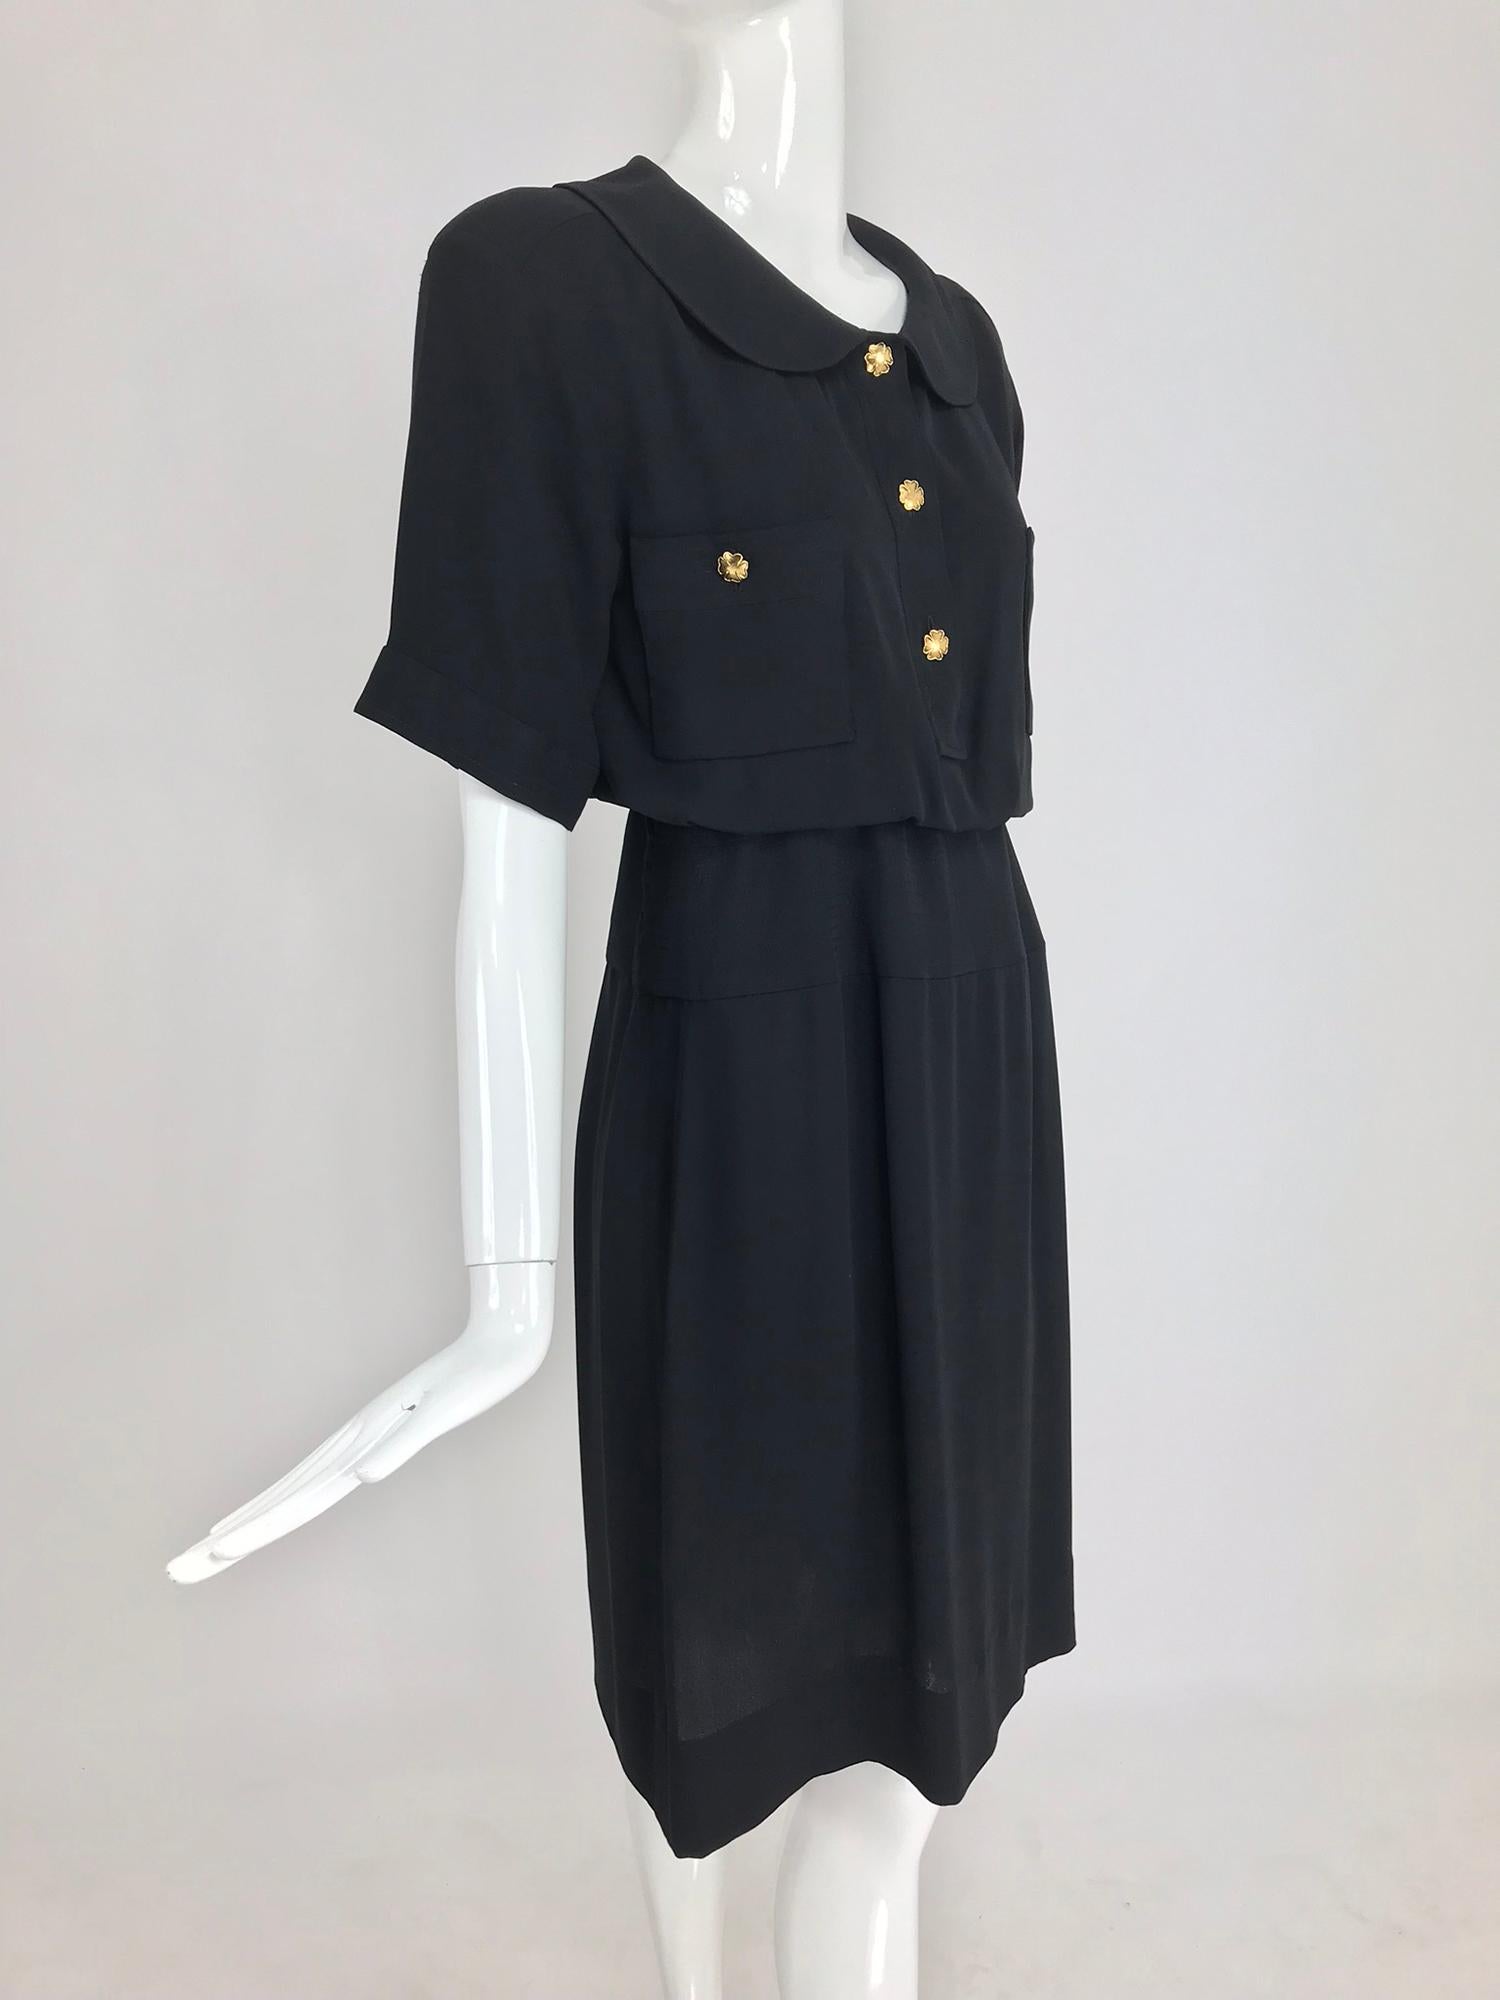 Black Chanel vintage black crepe shirtwaist day dress